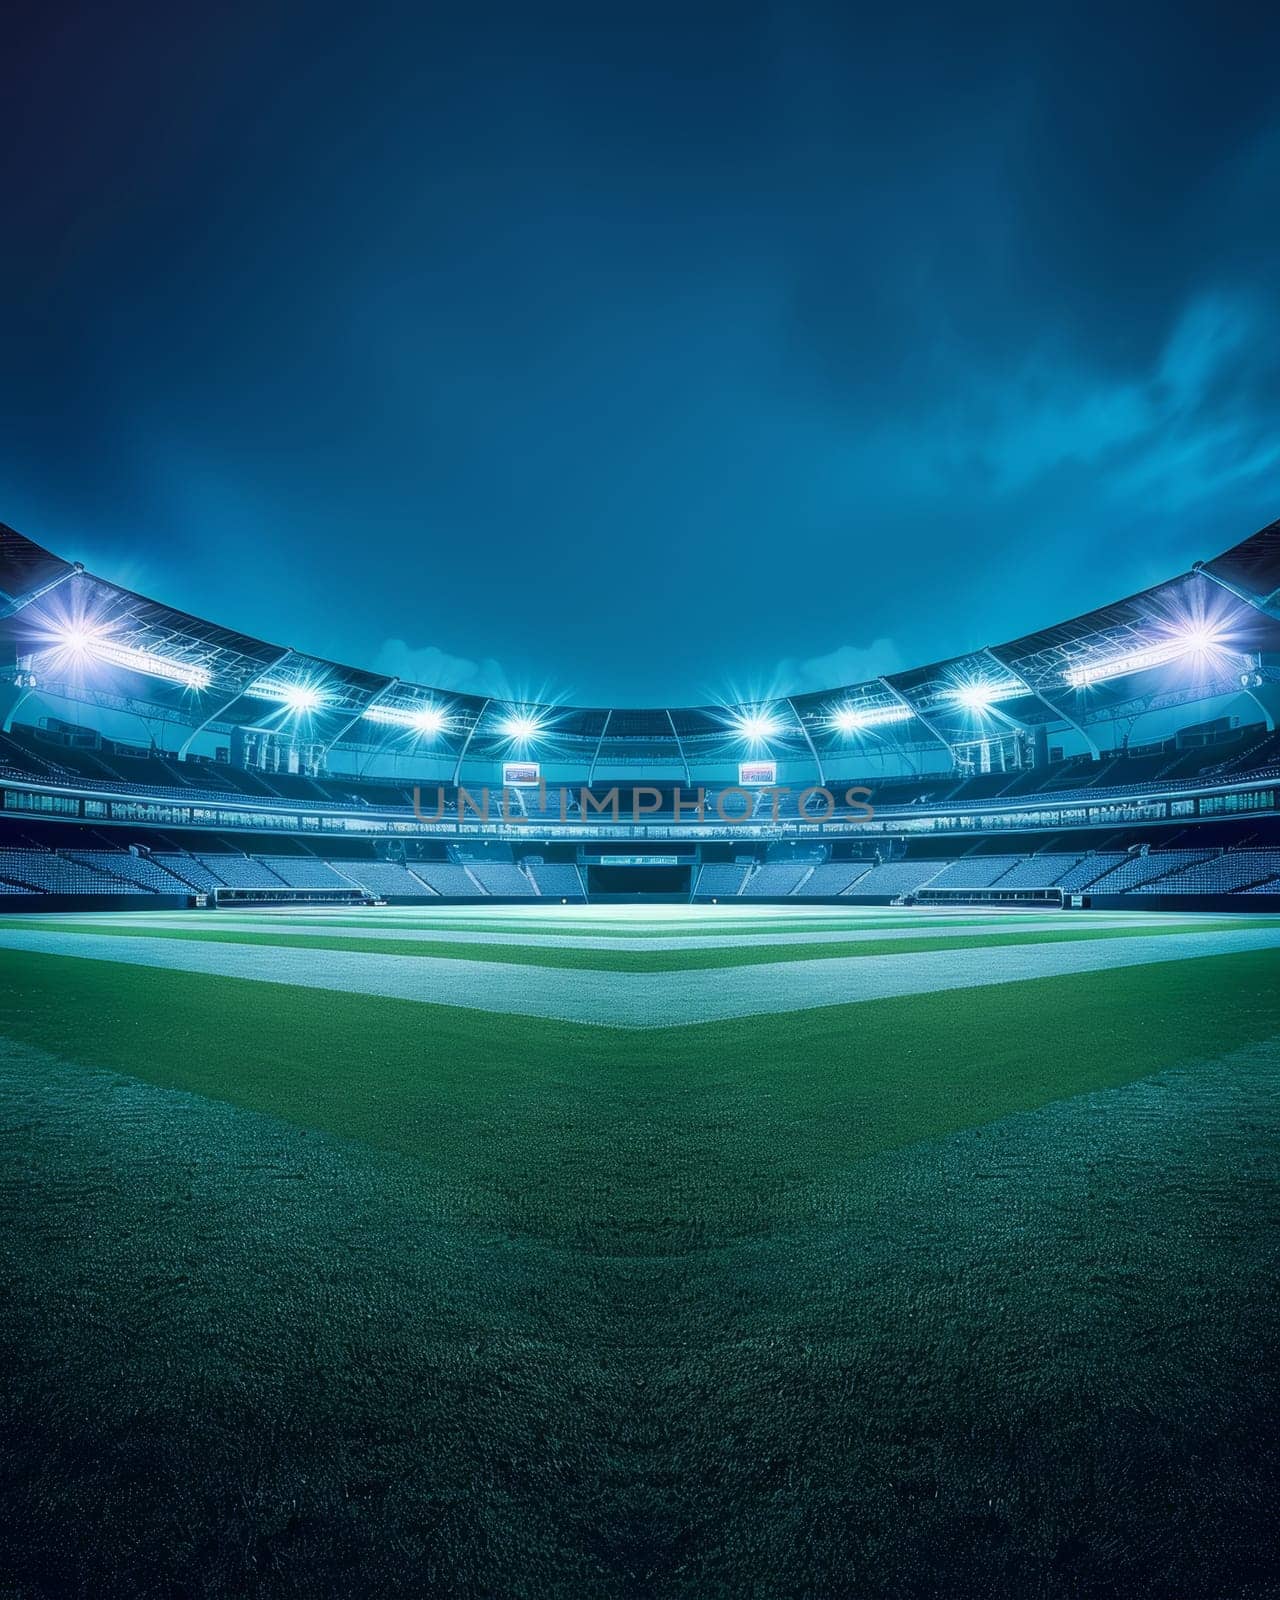 Illuminated, empty stadium at night with lush green field and bright floodlights.